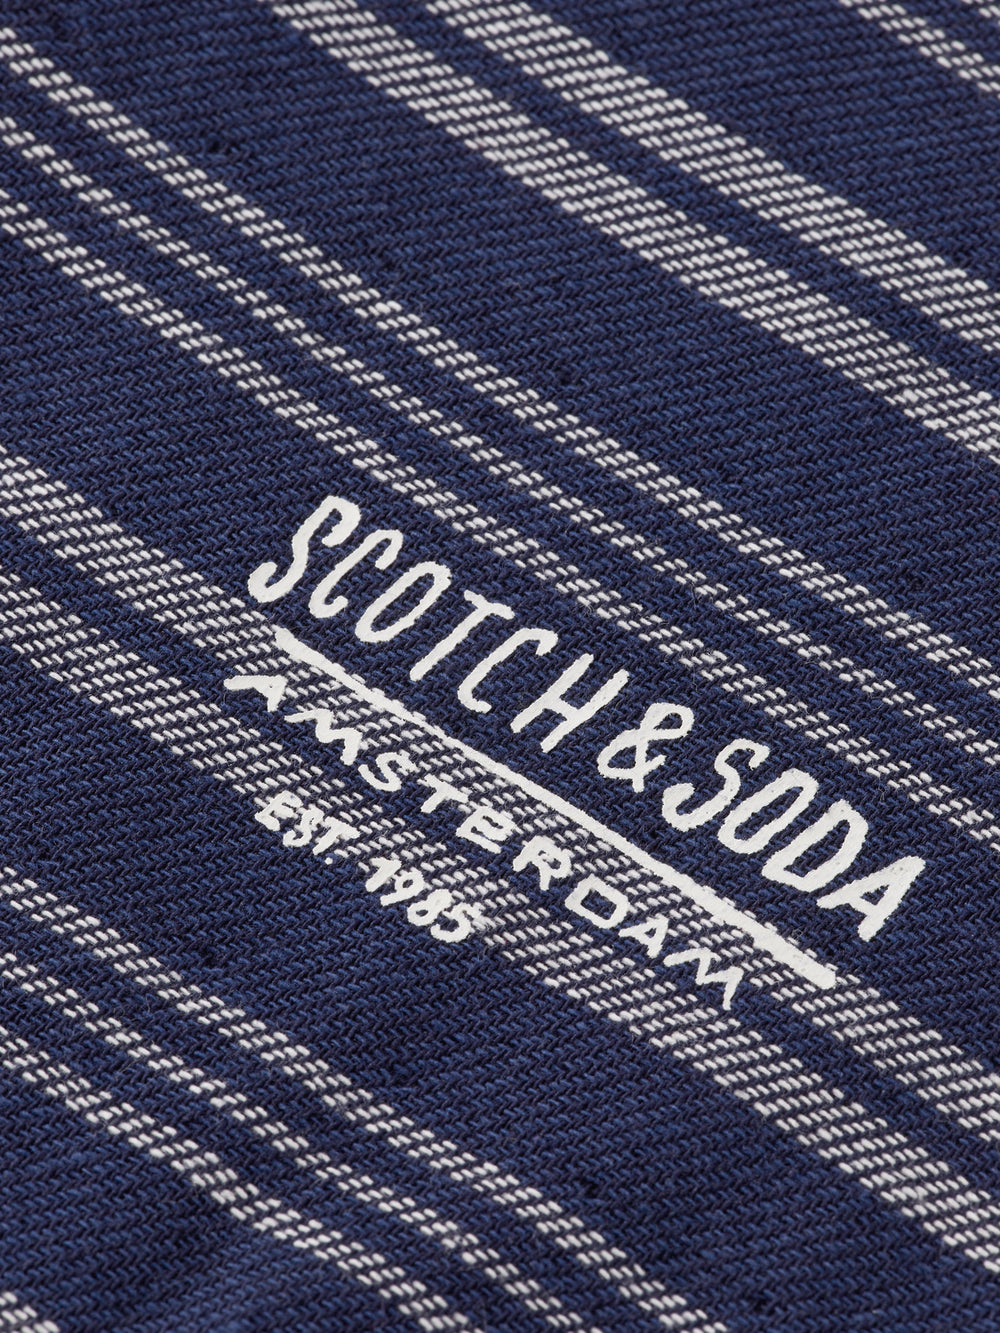 Double-faced twill check shirt - Scotch & Soda AU